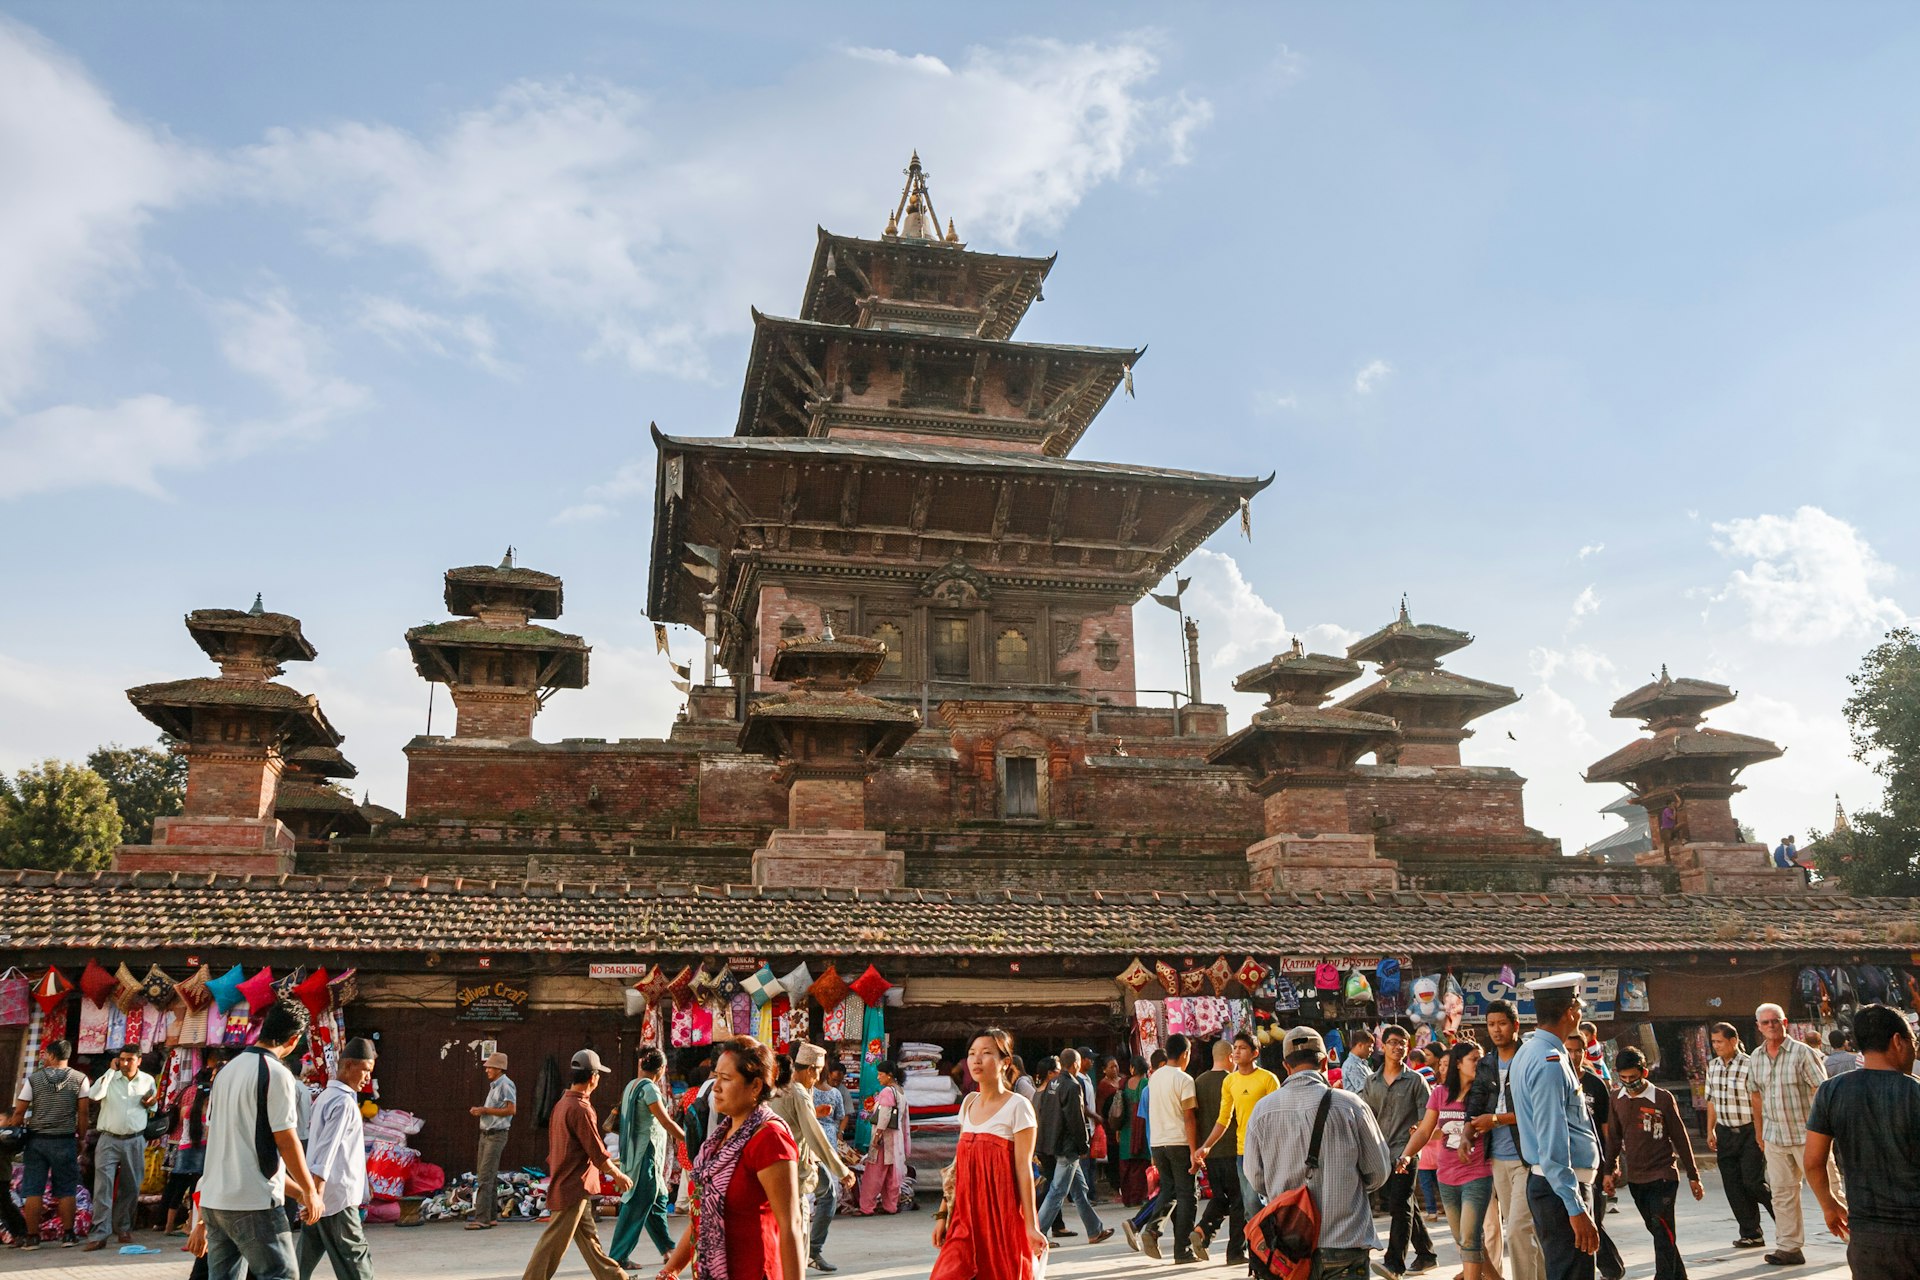 Crowds of people at the walls of the ancient Taleju Bhawani Temple on Durbar Sq in Kathmandu.